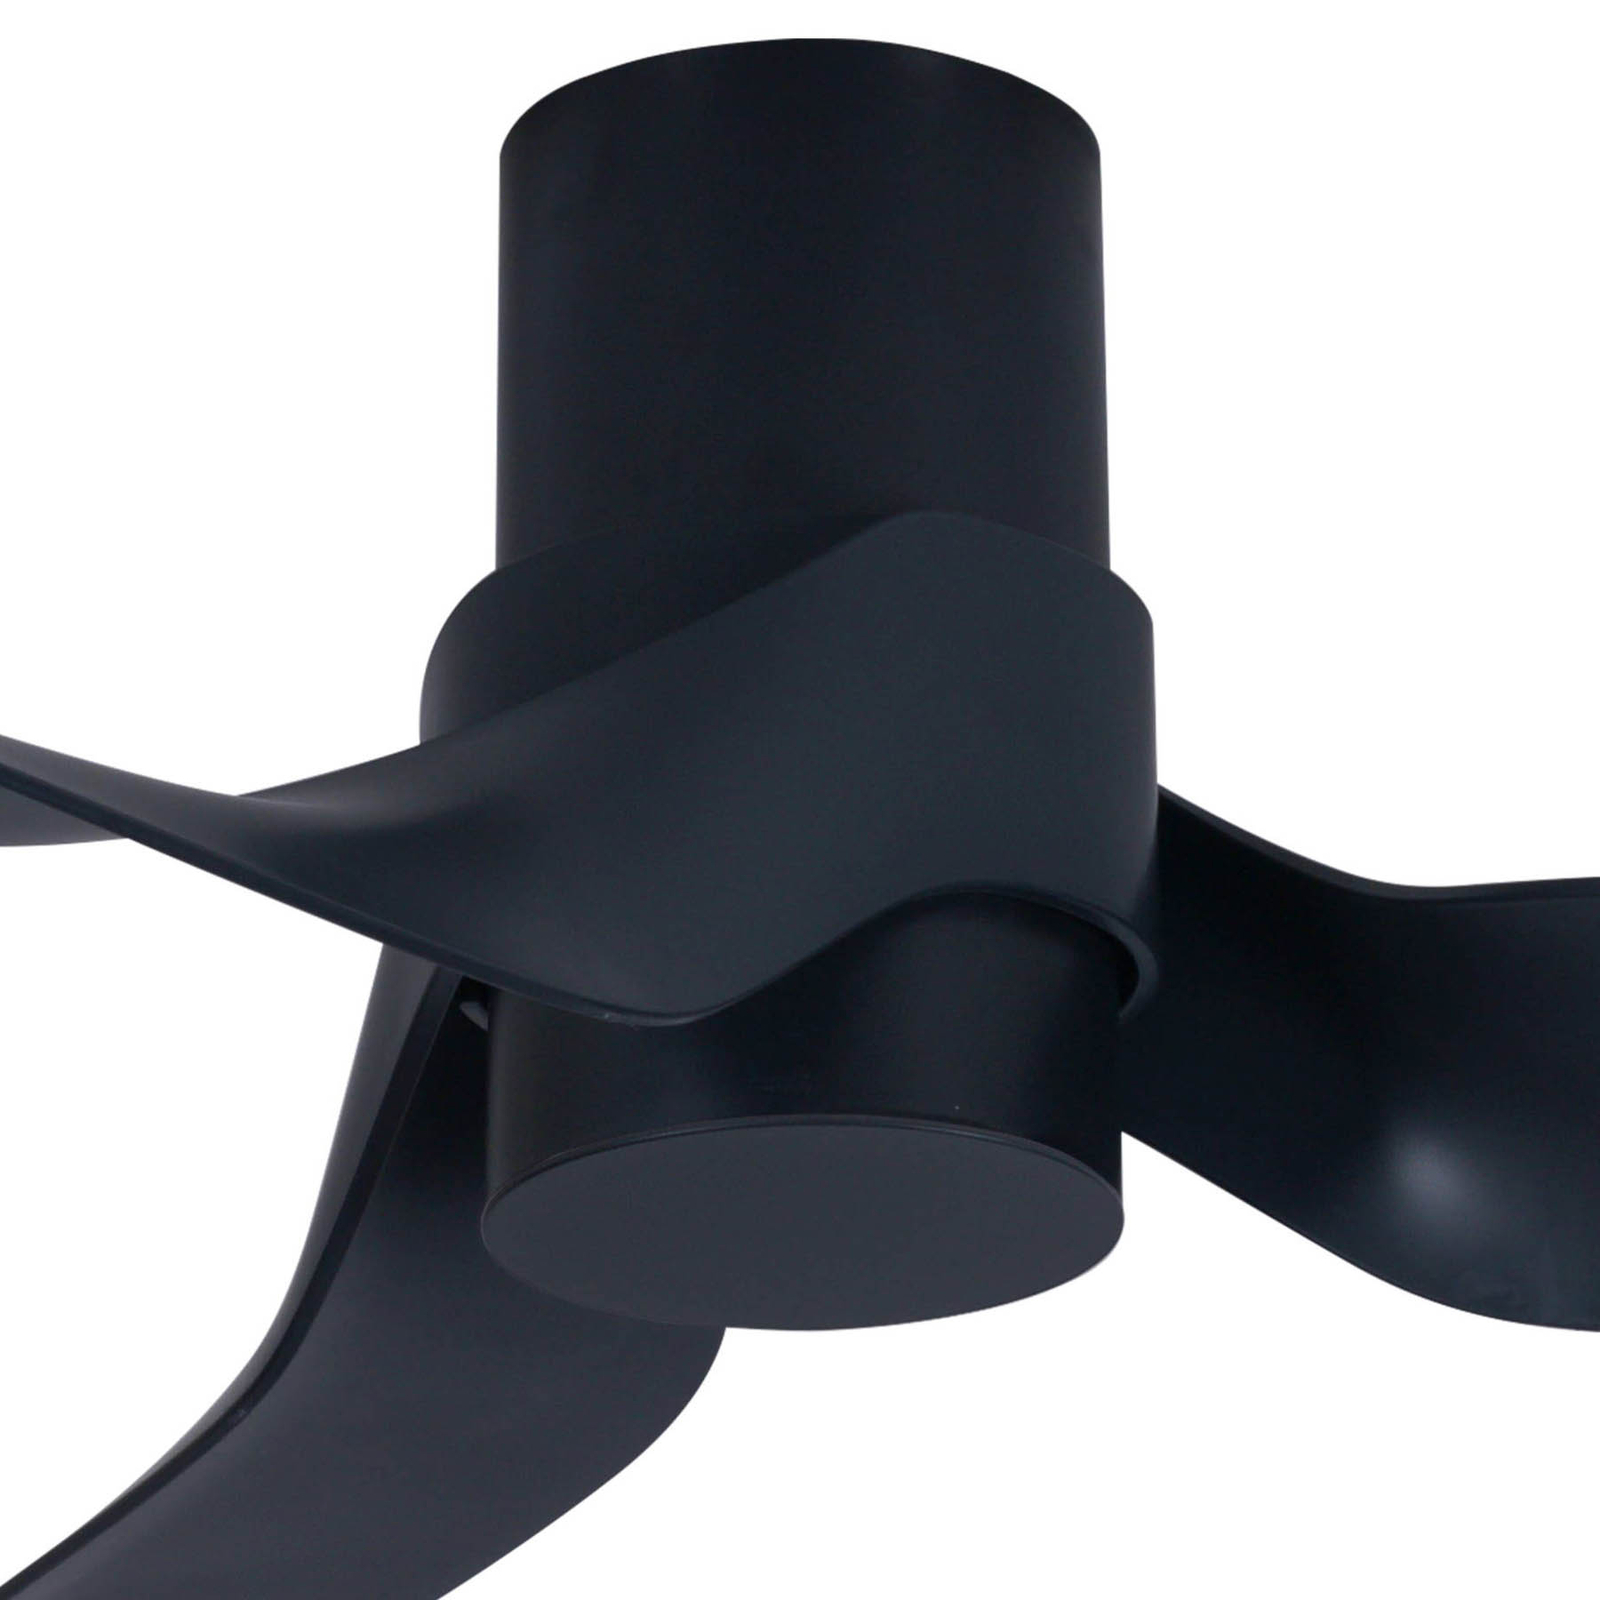 Beacon ceiling fan with light Nautica, black, quiet